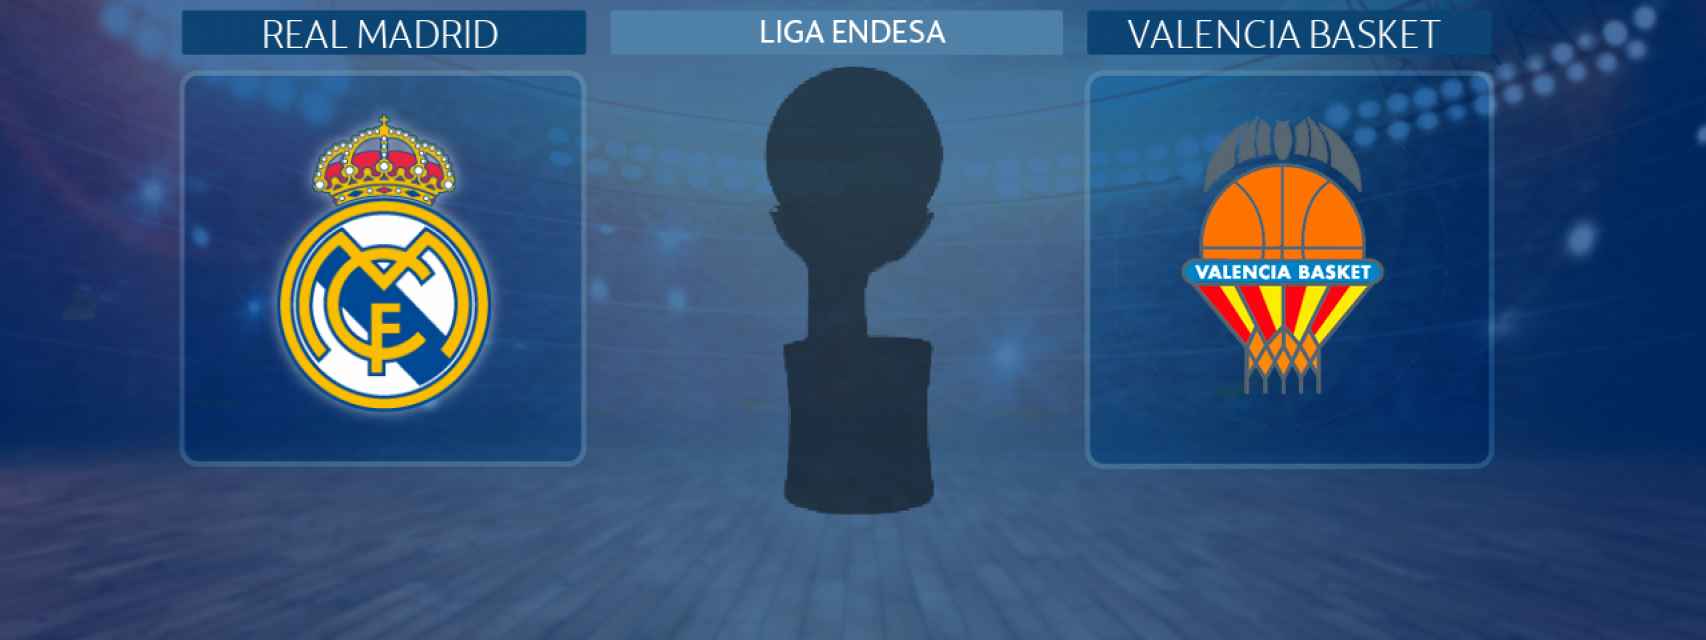 Real Madrid - Valencia Basket, semifinal de la Liga Endesa